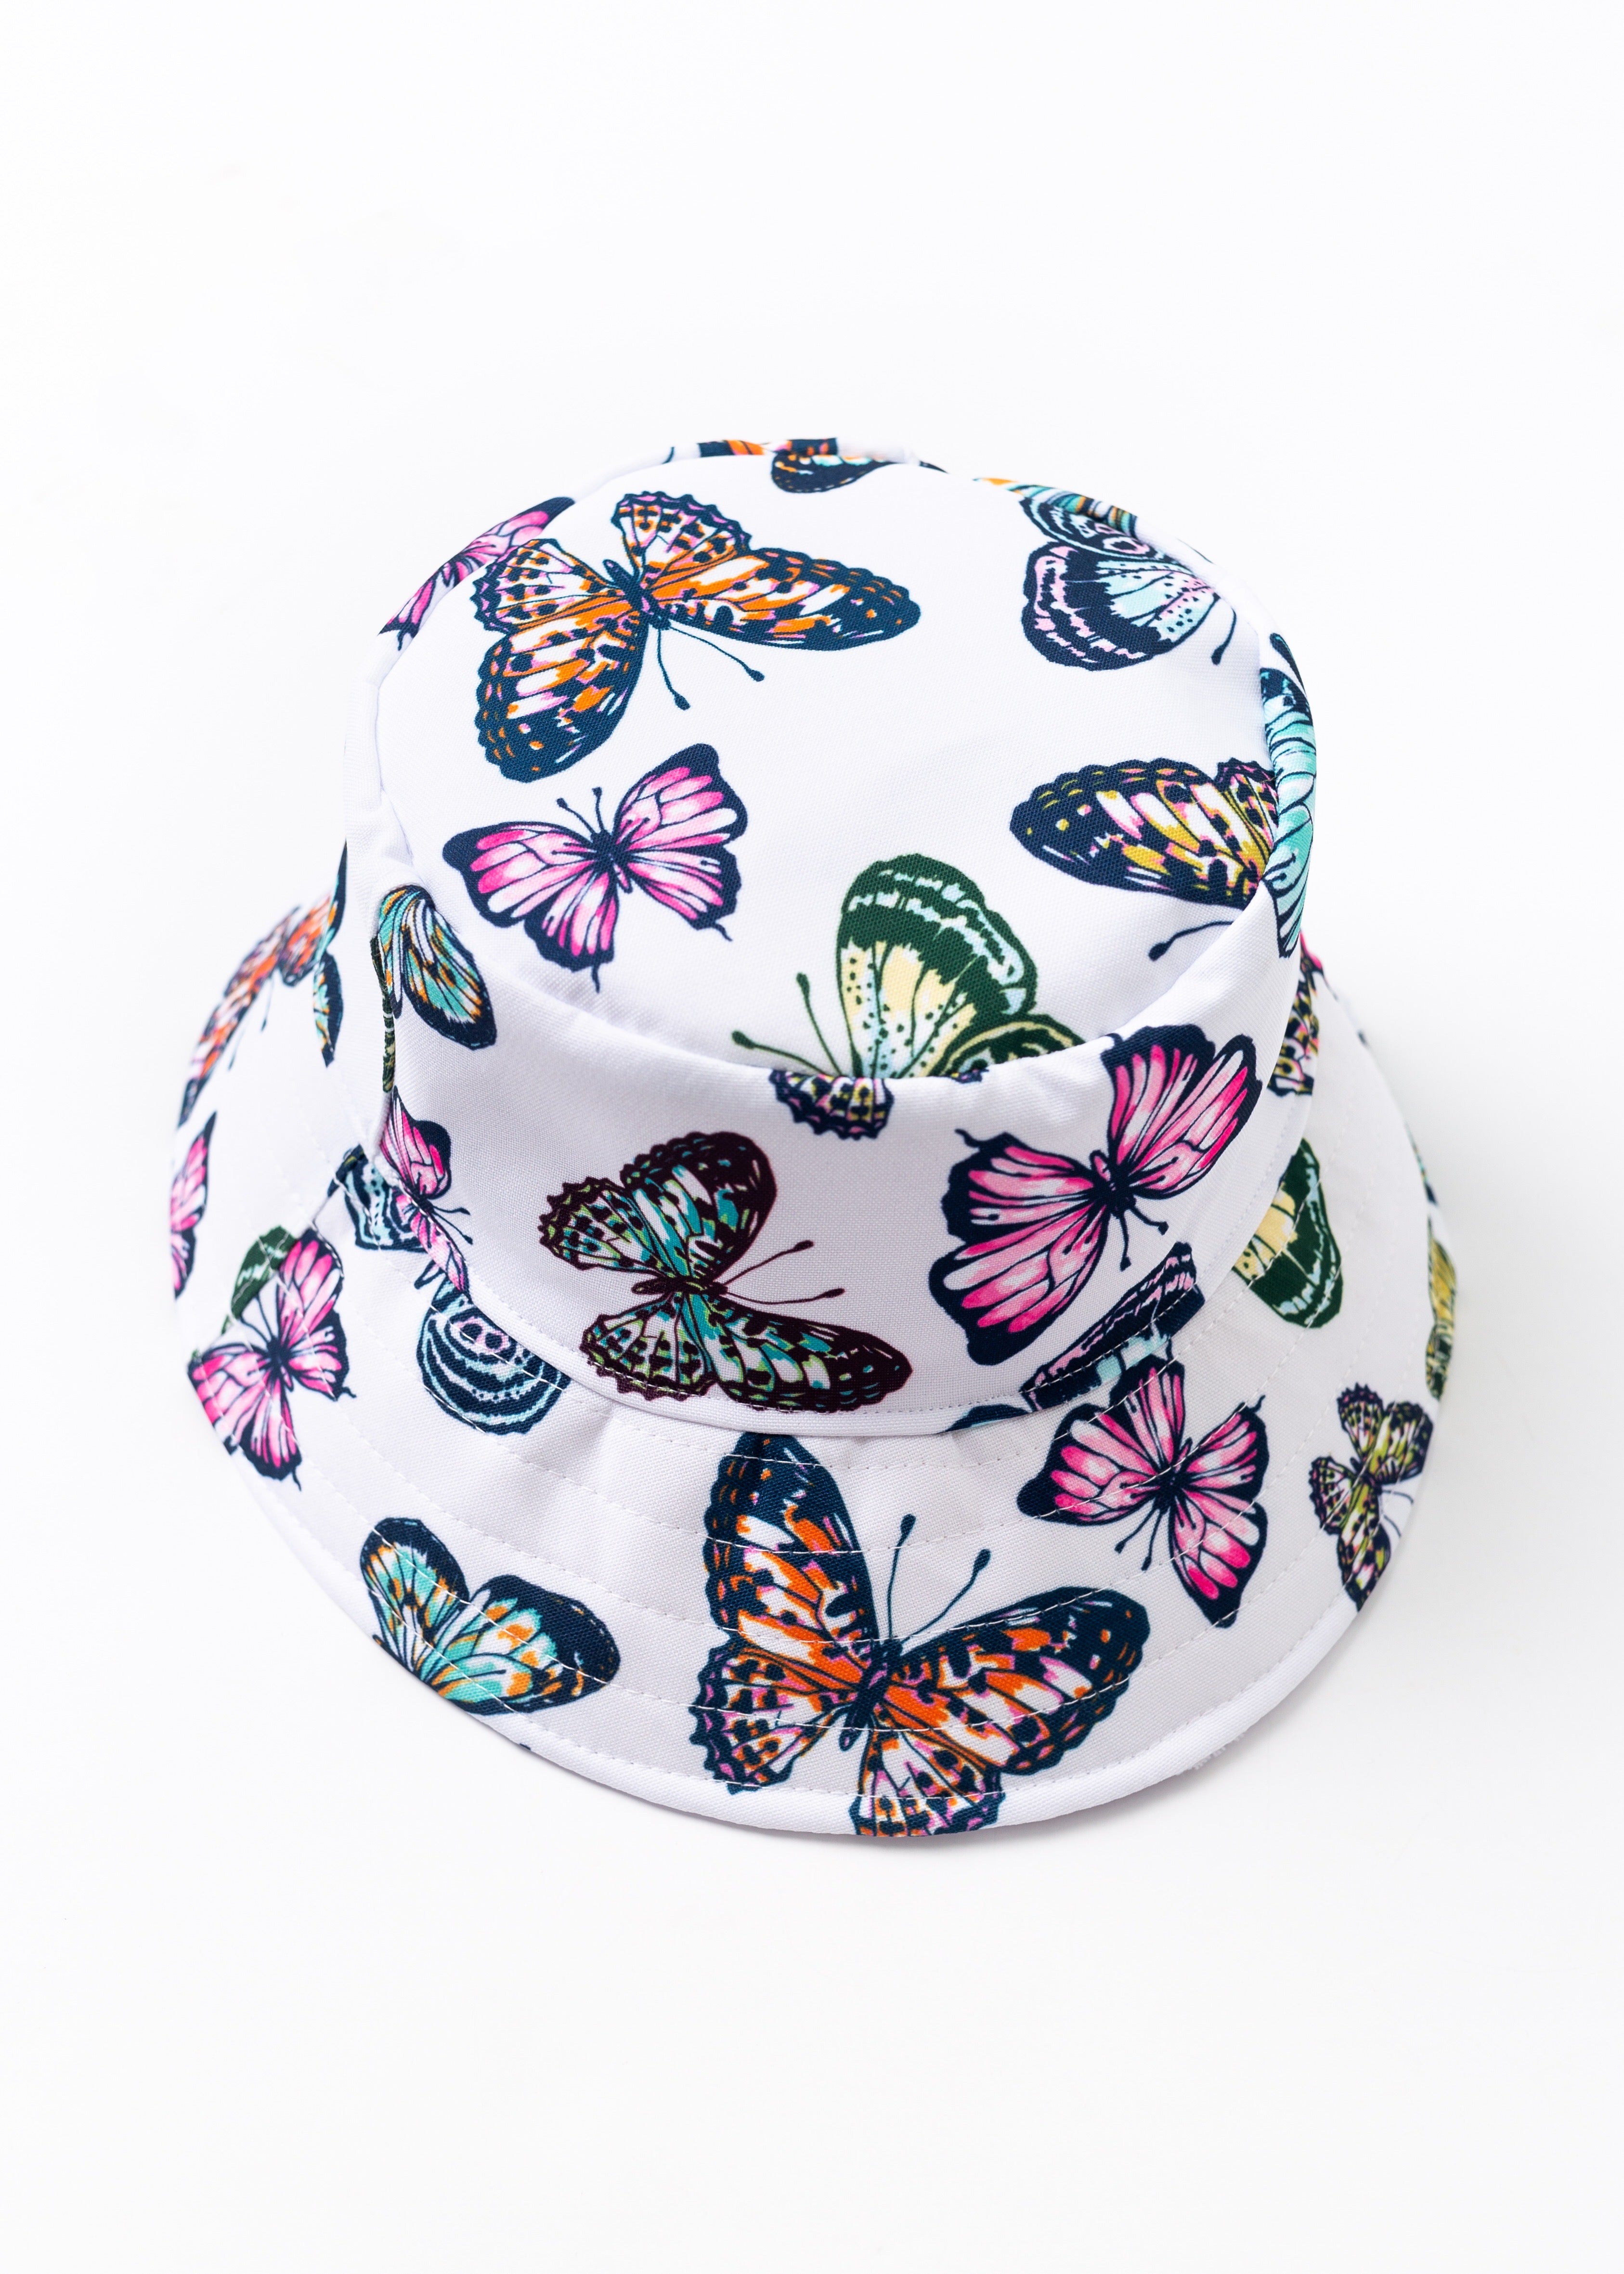 Butterfly Bucket Hatte Top Quality 6c040 92307 - butterfly bucket hat roblox code